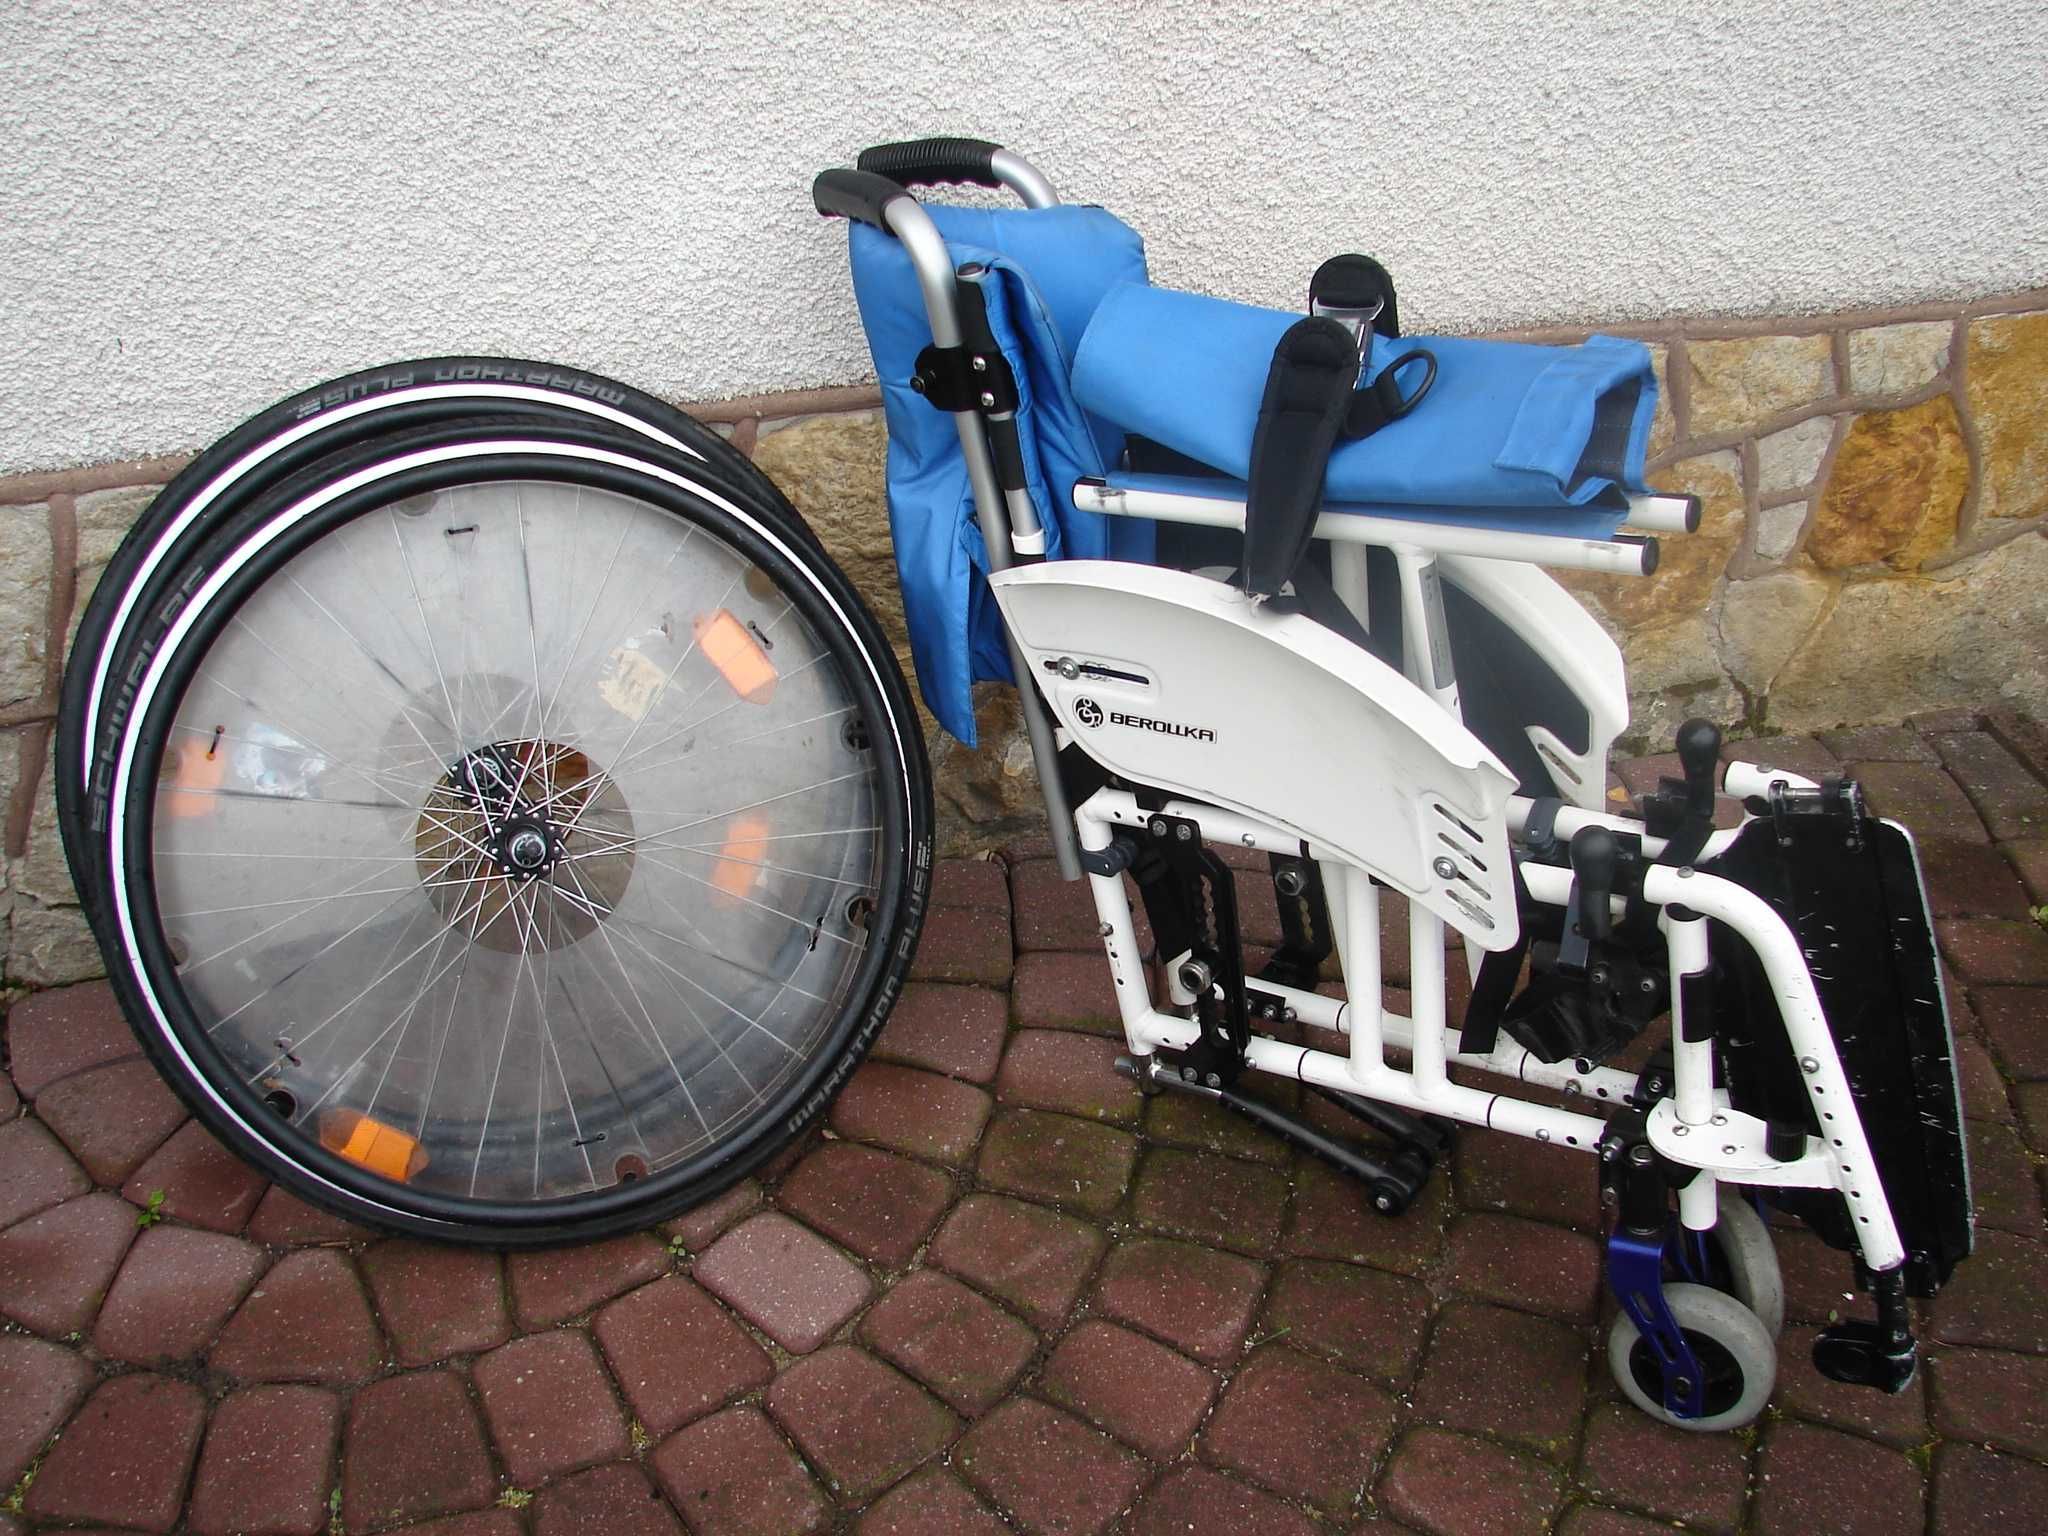 Wózek inwalidzki aktywny BEROLLKA